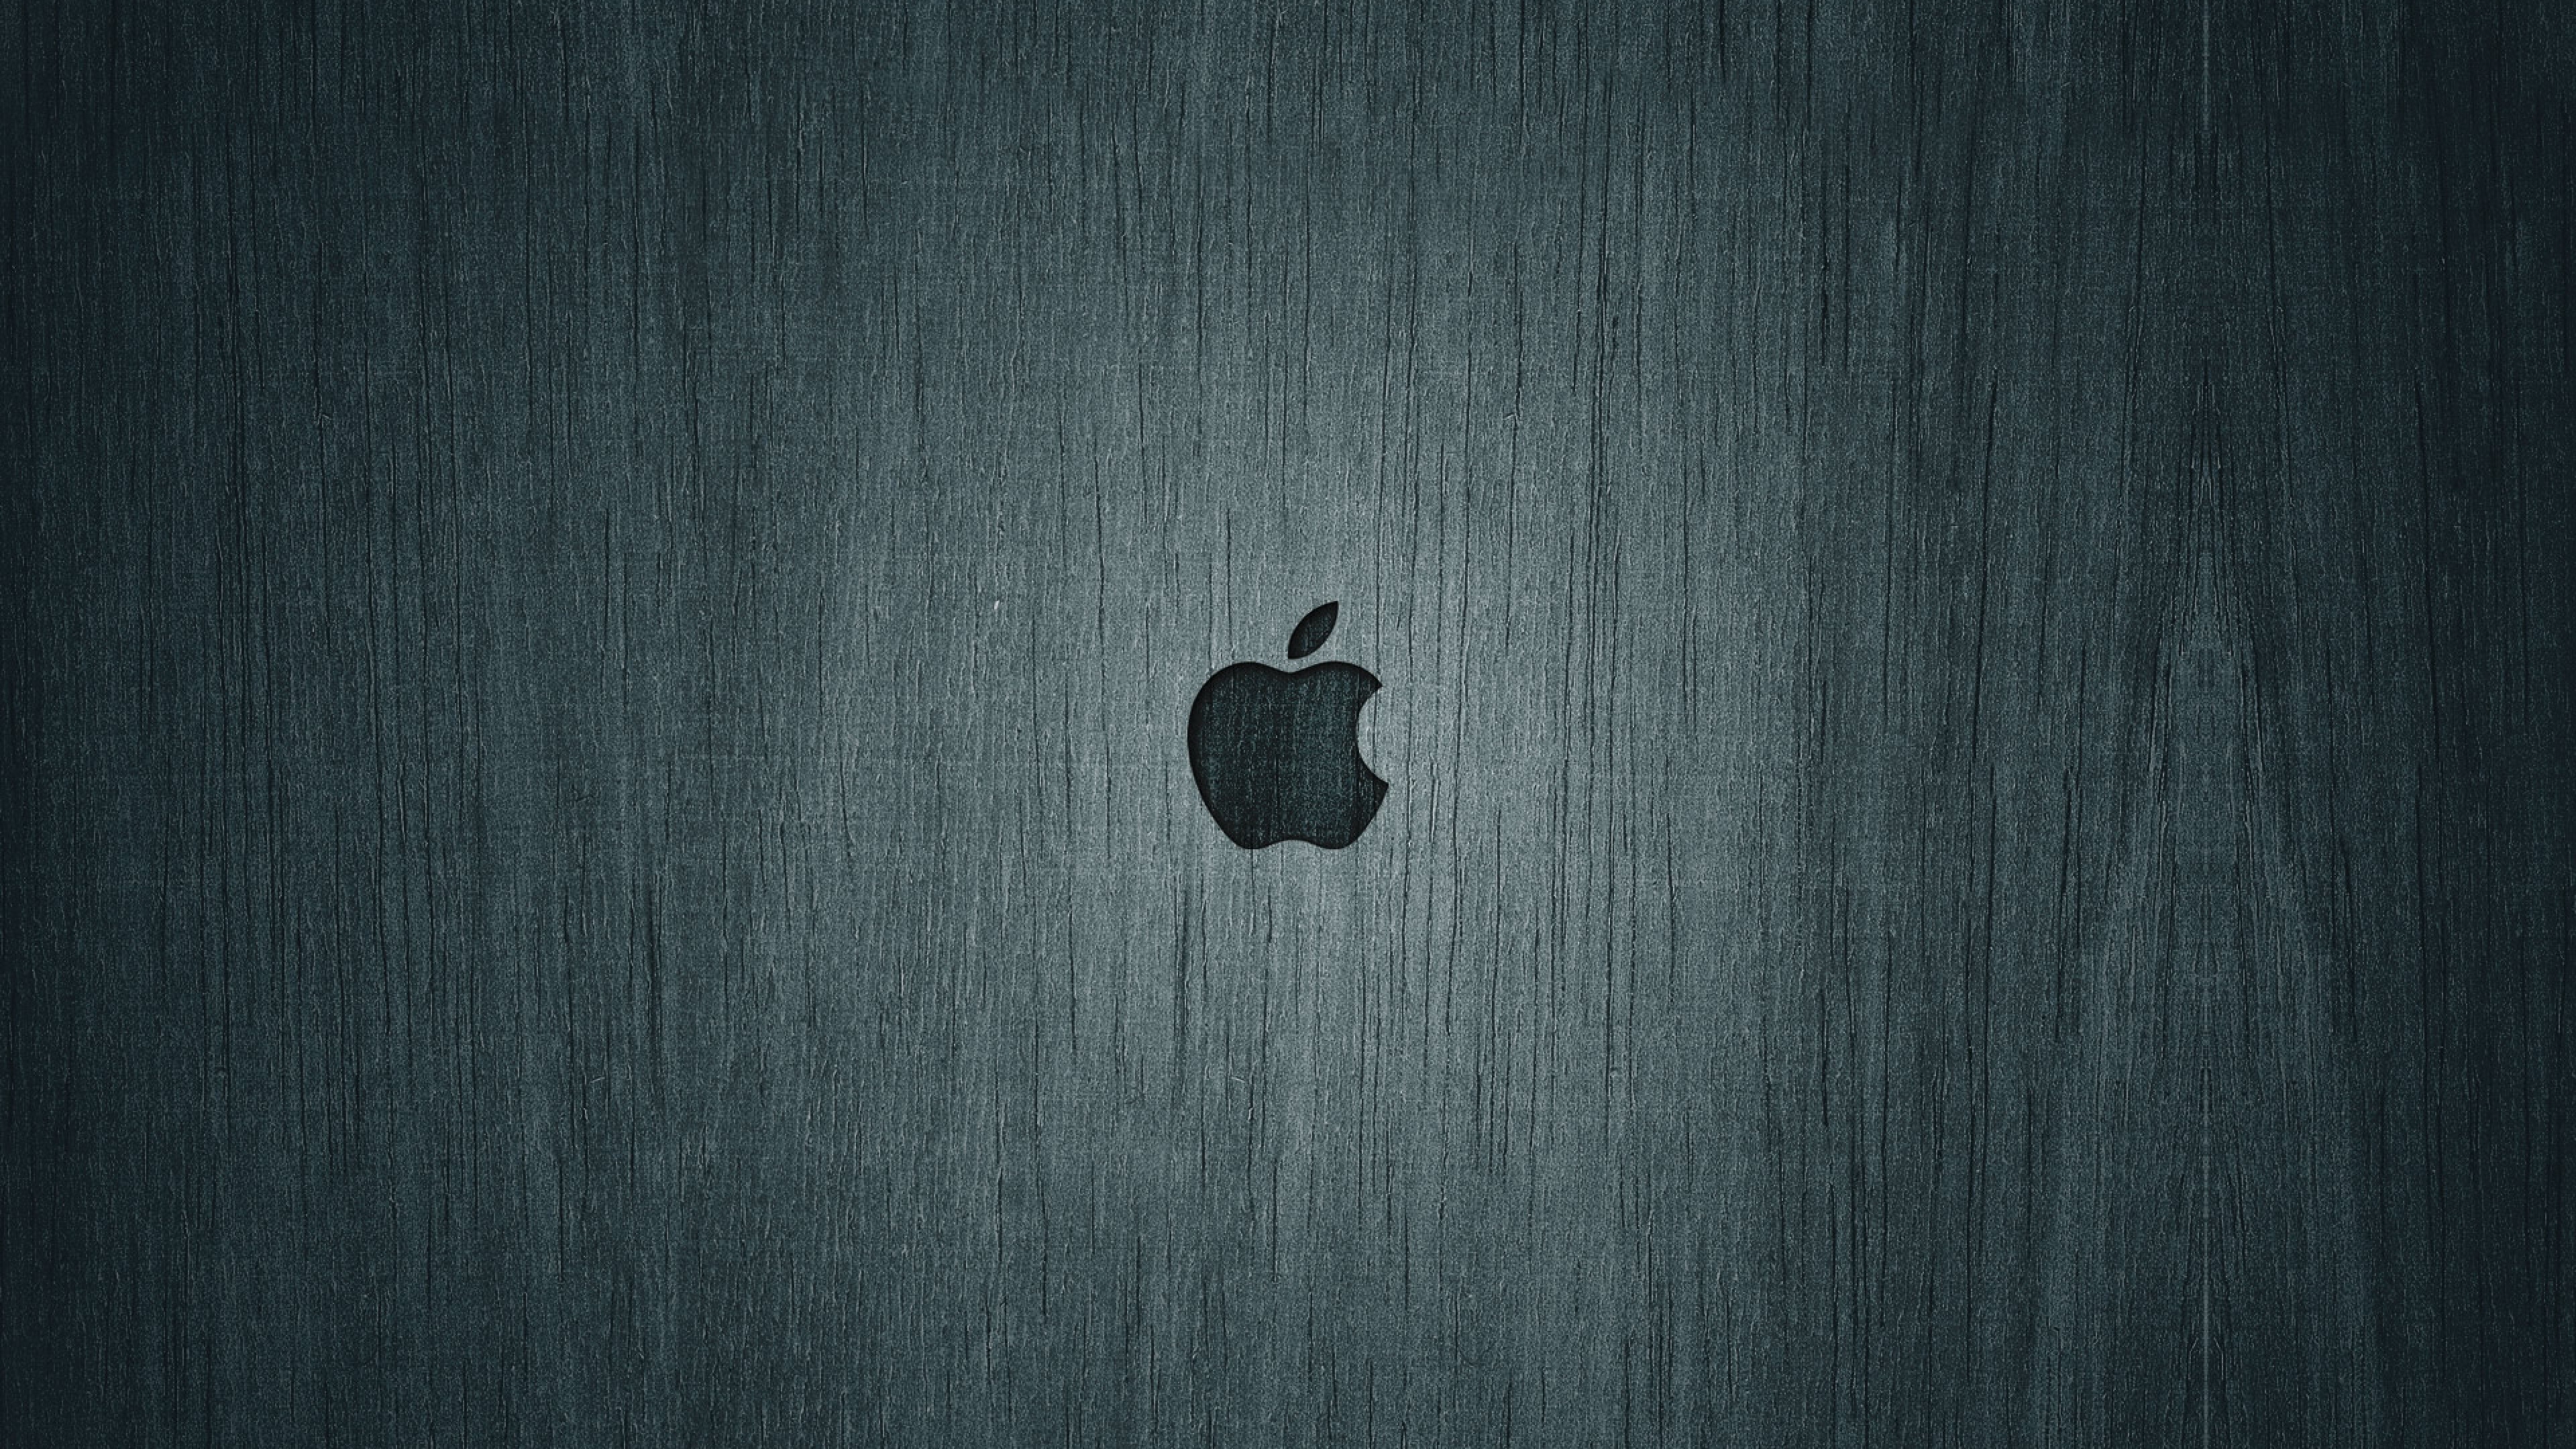  Apple Mac Background Black Brand Logo Wallpaper Background 4K 3840x2160